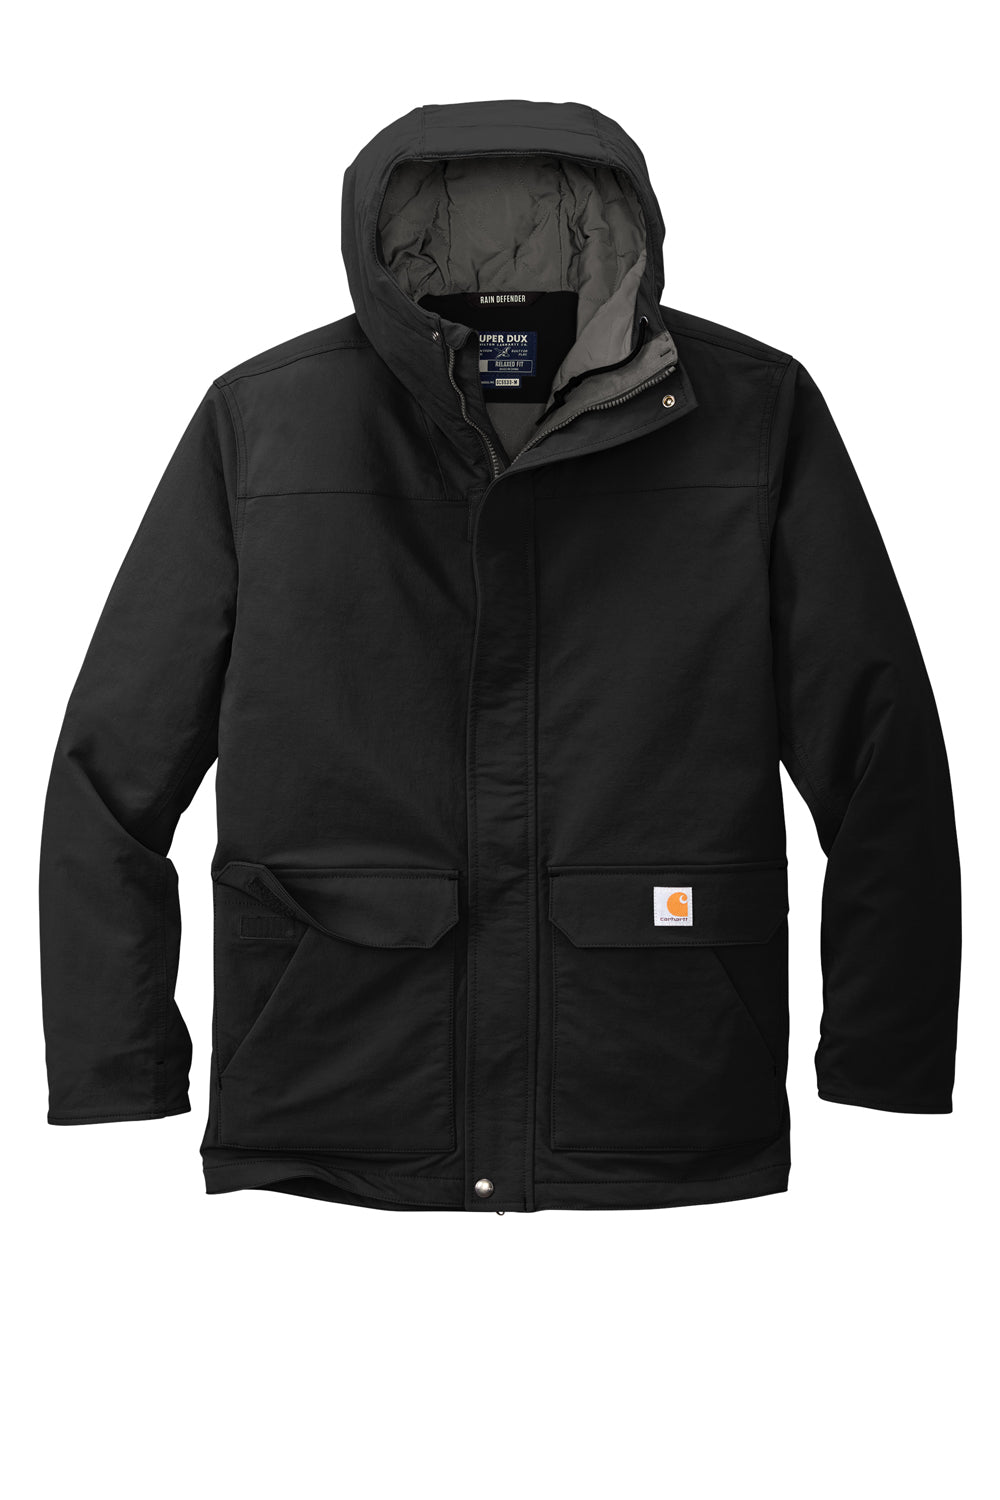 Carhartt CT105533 Mens Super Dux Wind & Water Resistant Full Zip Hooded Jacket Black Flat Front